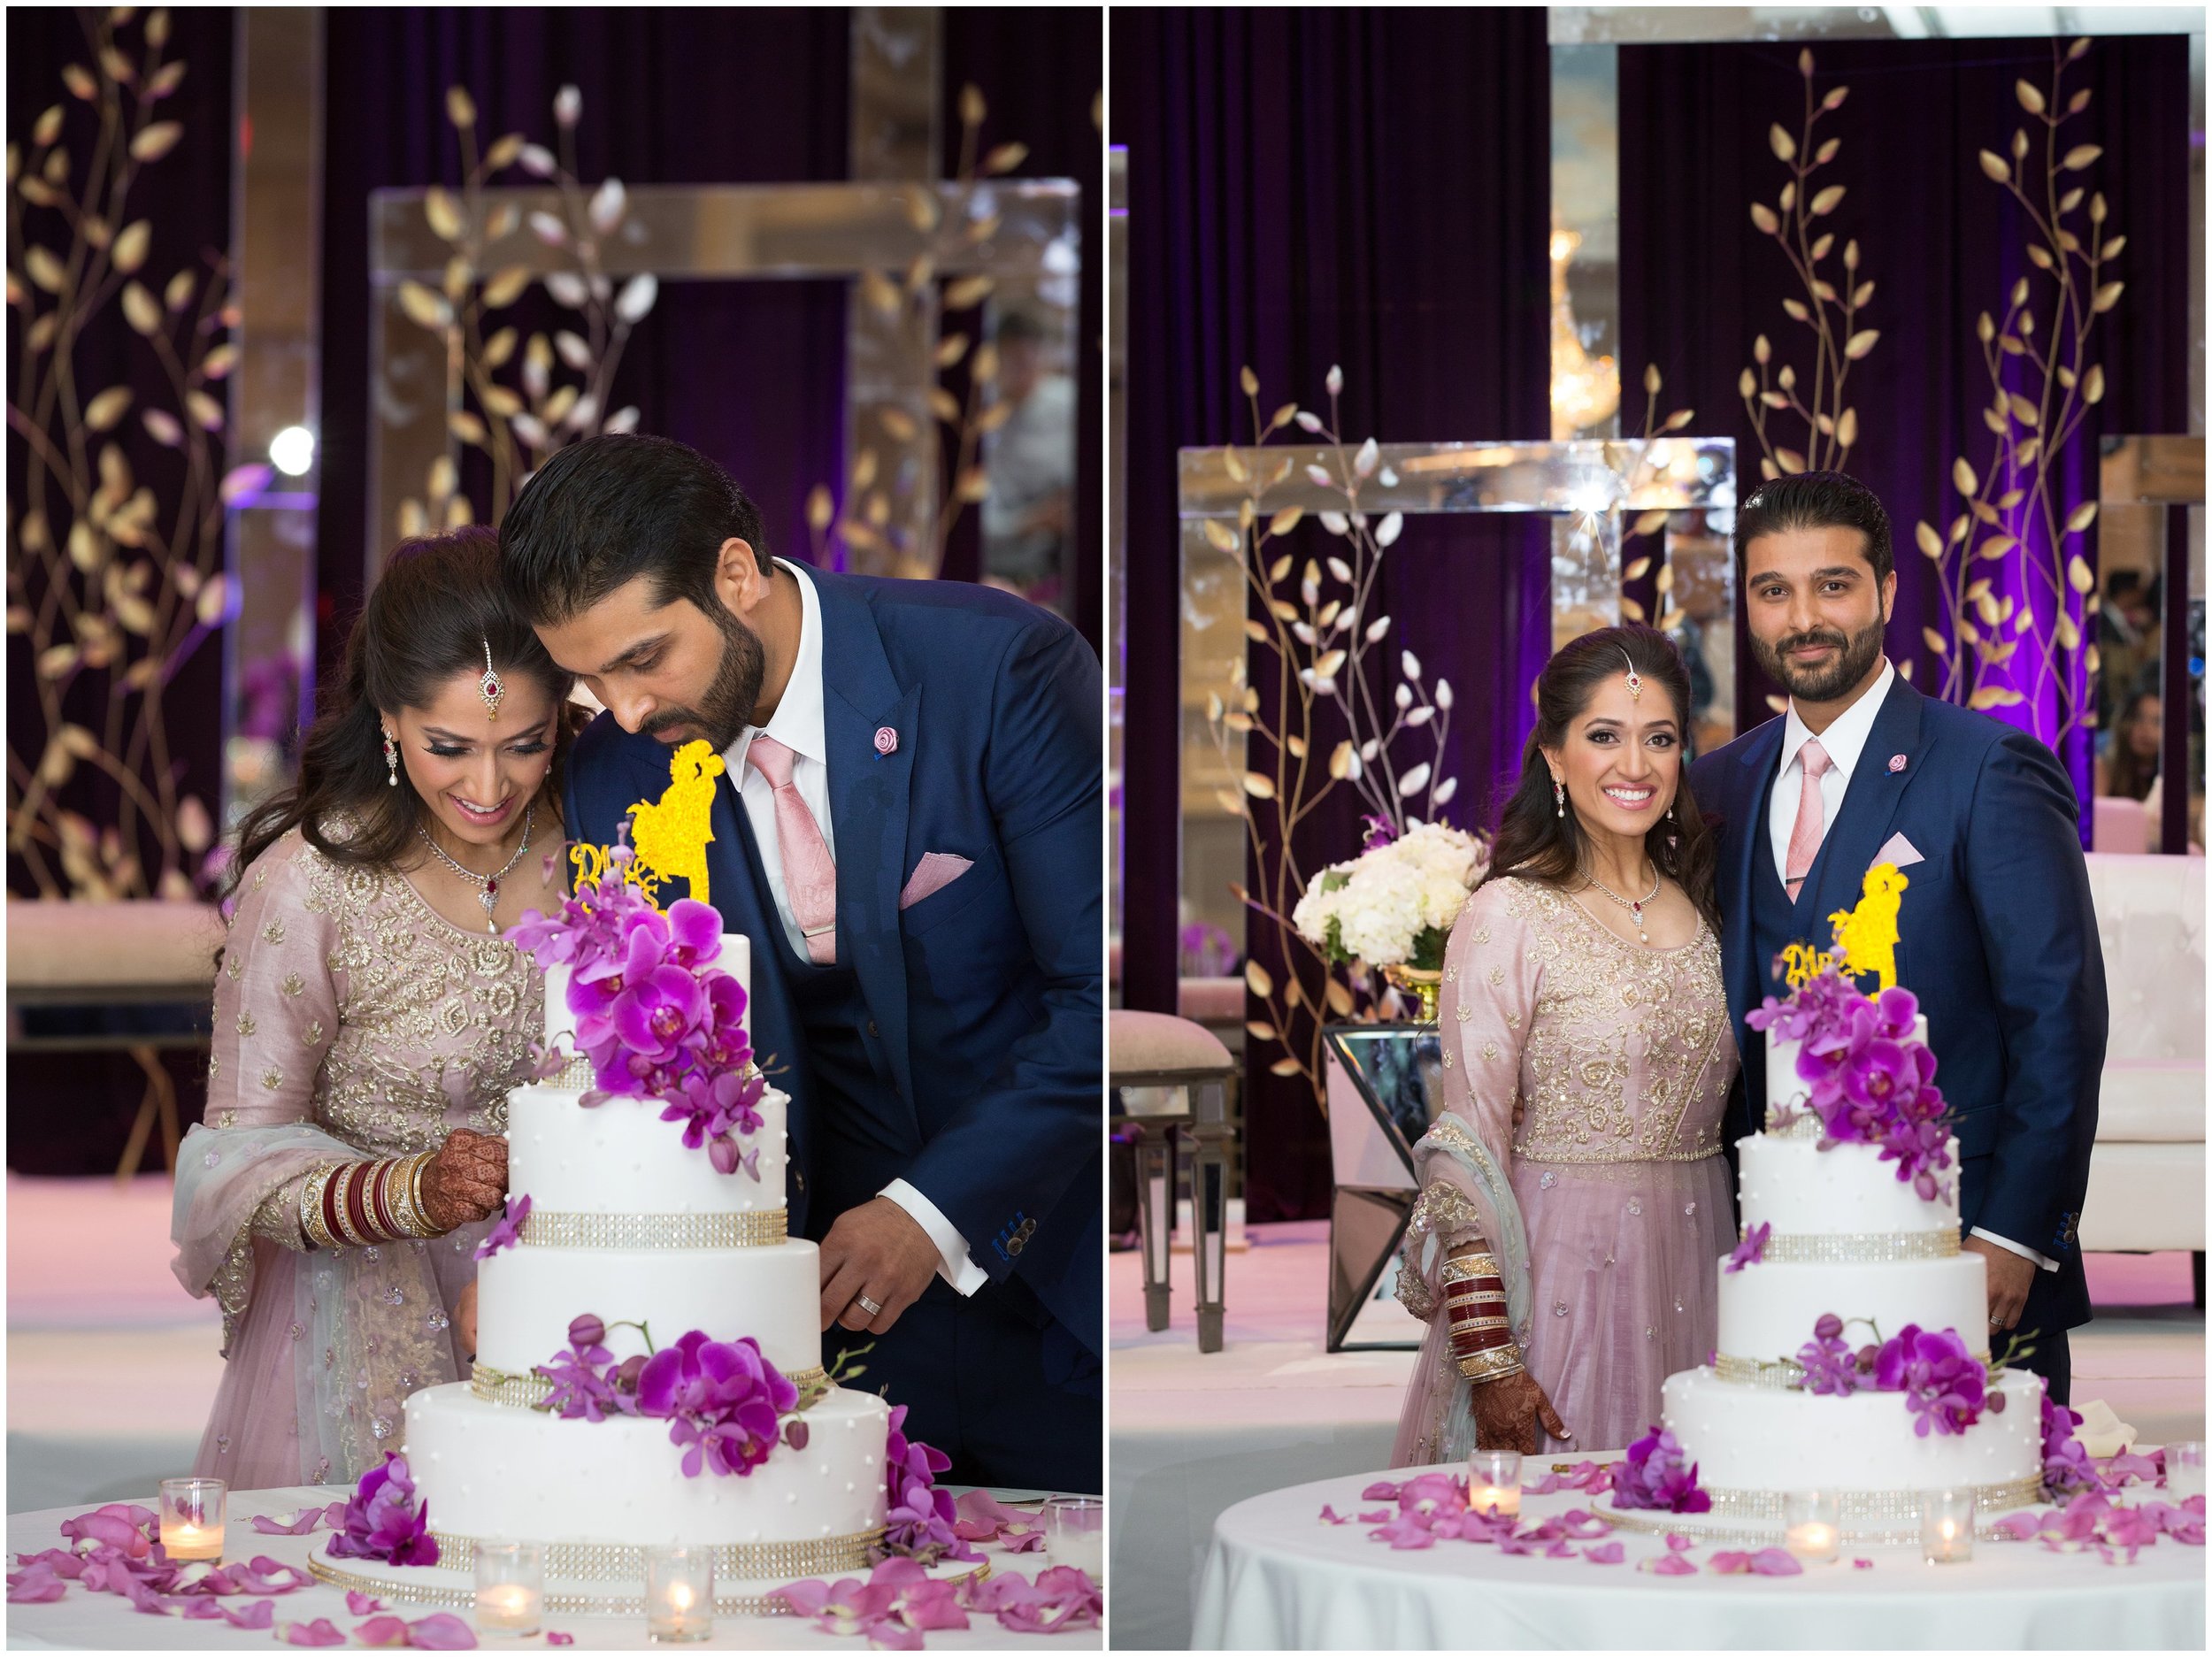 Le Cape Weddings - South Asian Wedding in Illinois - Tanvi and Anshul -0954_LuxuryDestinationPhotographer.jpg